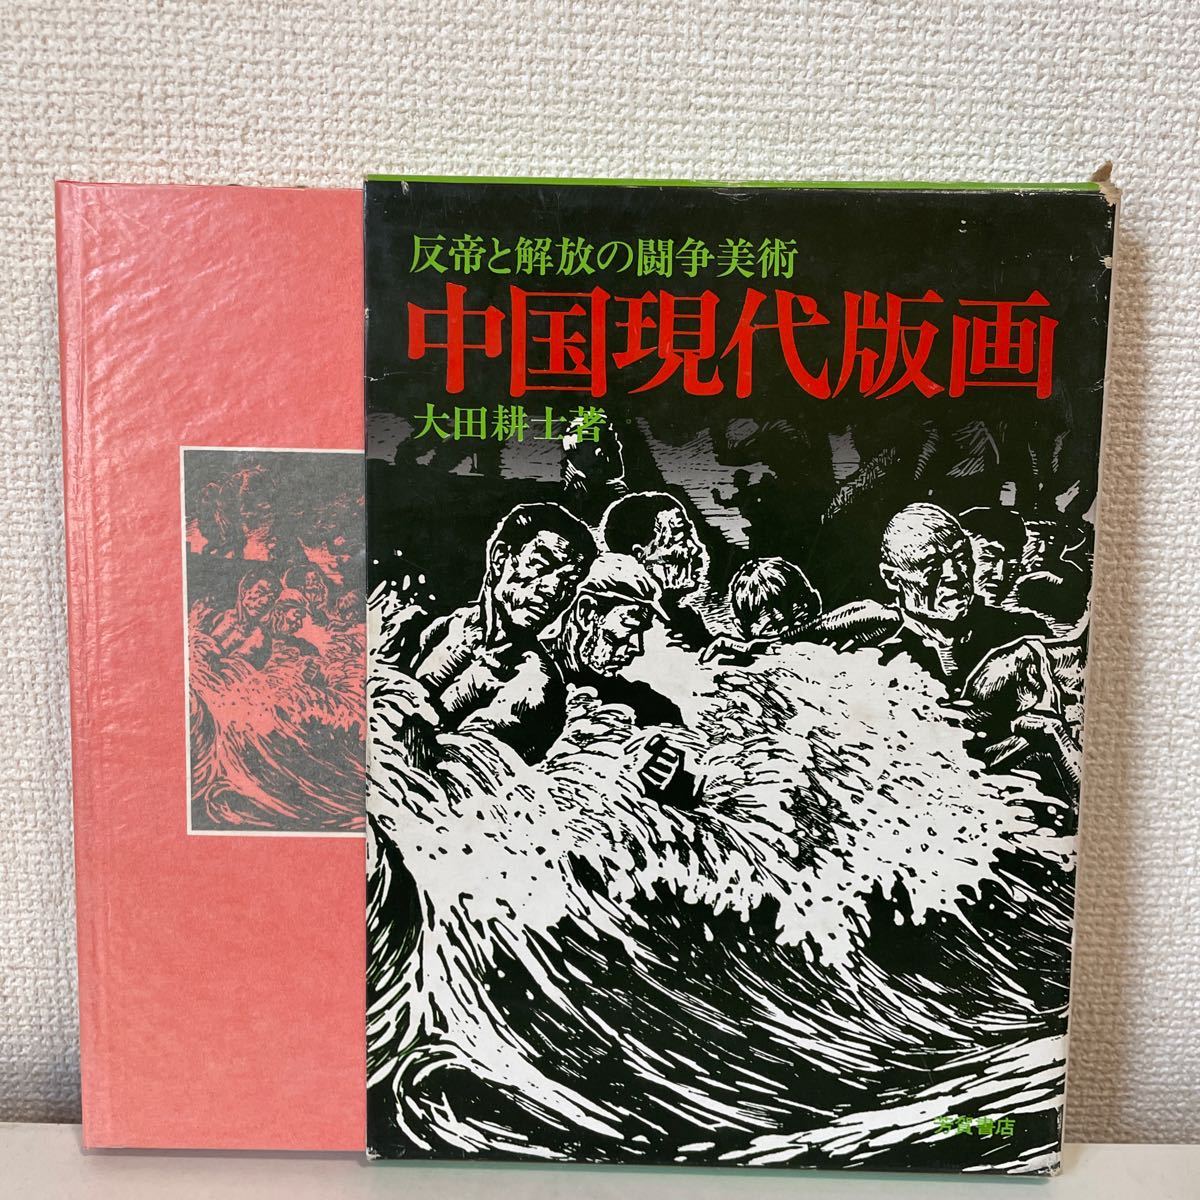 [साम्राज्यवाद विरोधी और मुक्ति संघर्ष कला: समकालीन चीनी प्रिंट] 1972, कोजी ओटा, हागा शोटेन, बॉक्स के साथ, चित्रकारी, कला पुस्तक, संग्रह, कला पुस्तक